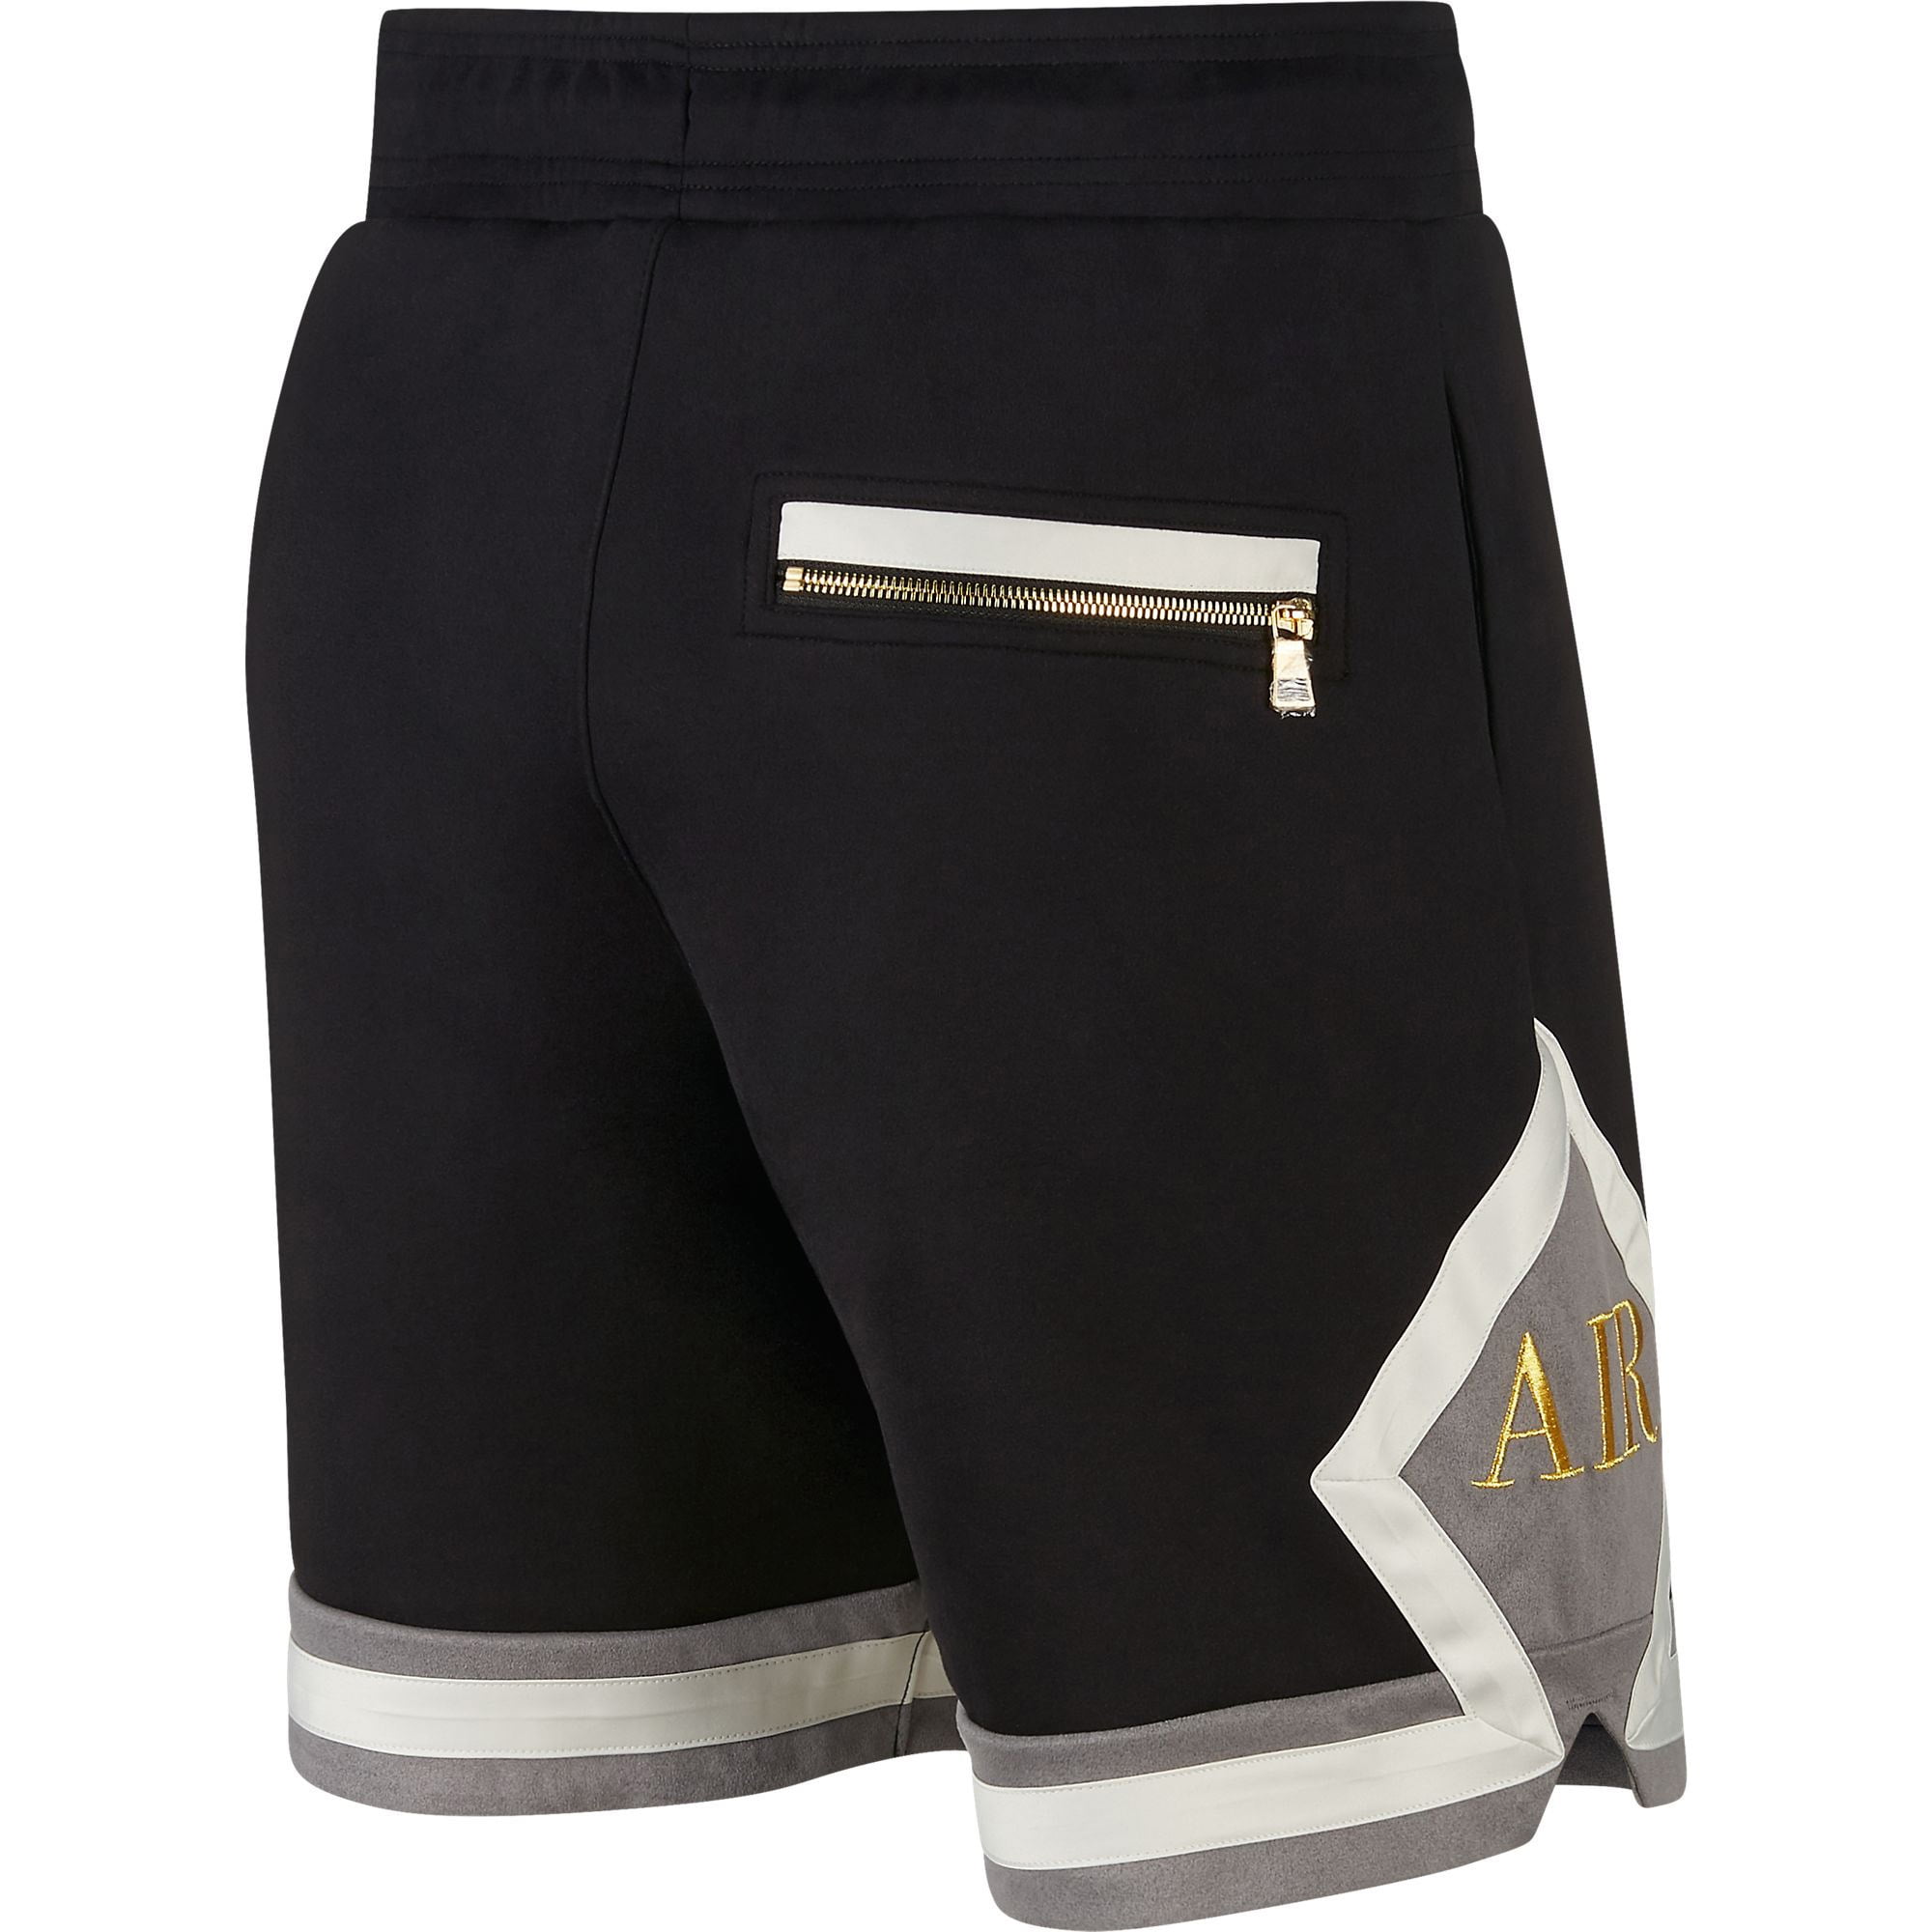 Air Jordan Remastered Diamond Men's Shorts Black-Grey-Metallic